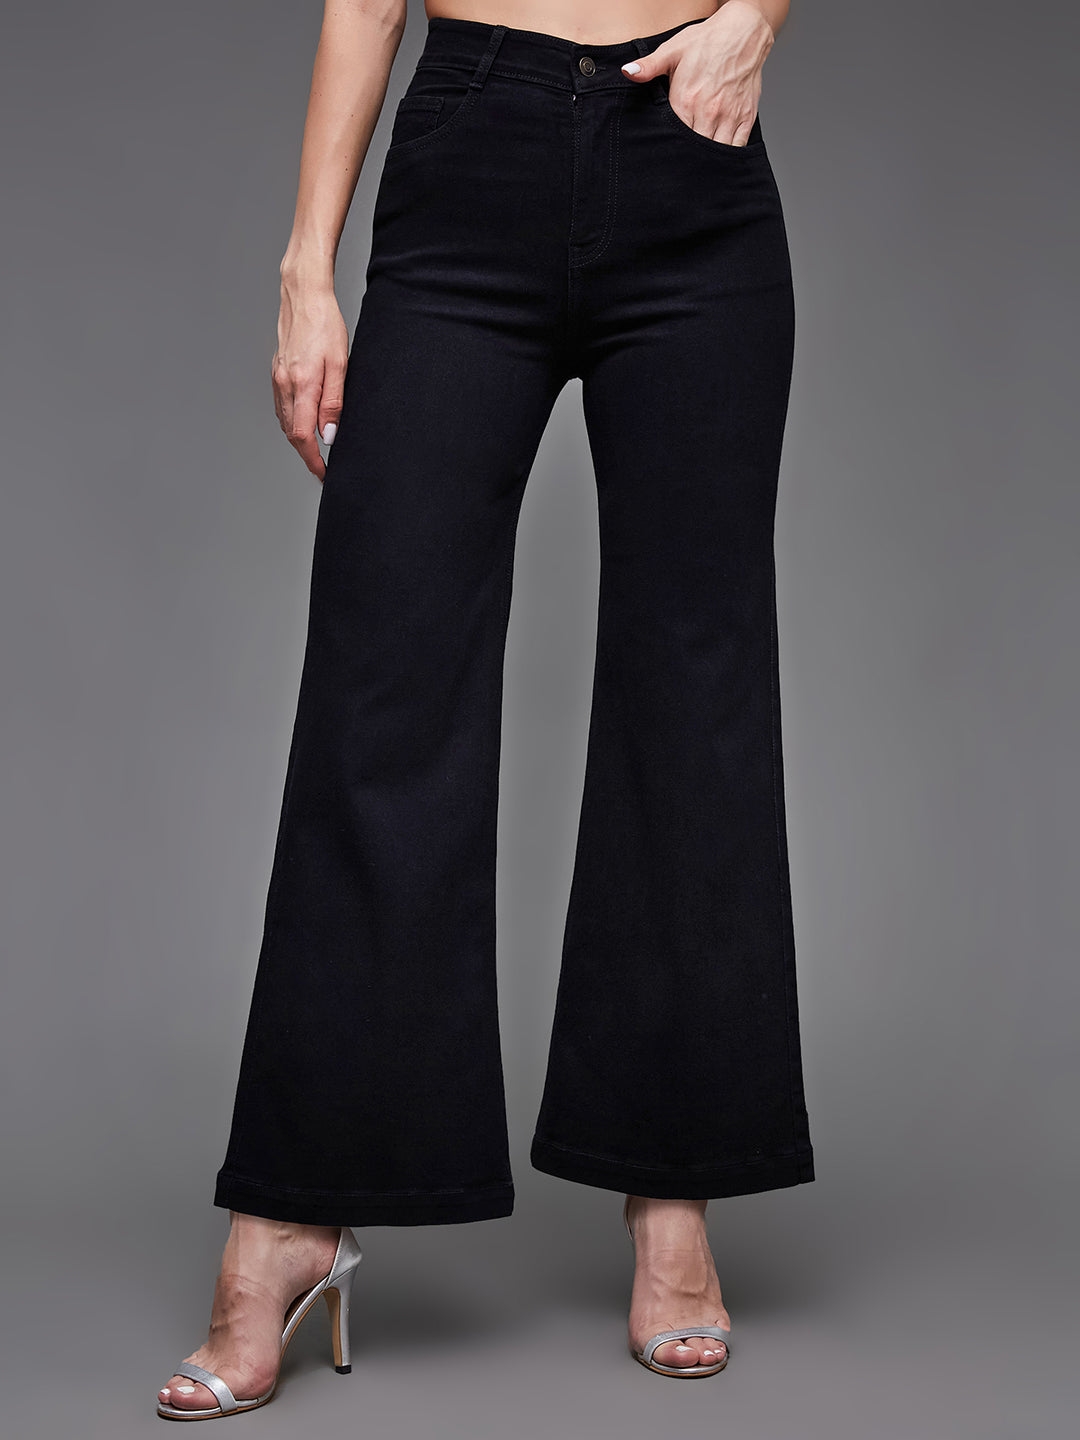 Black Wide Leg High Rise Clean Look Regular-Length Stretchable Denim Jeans